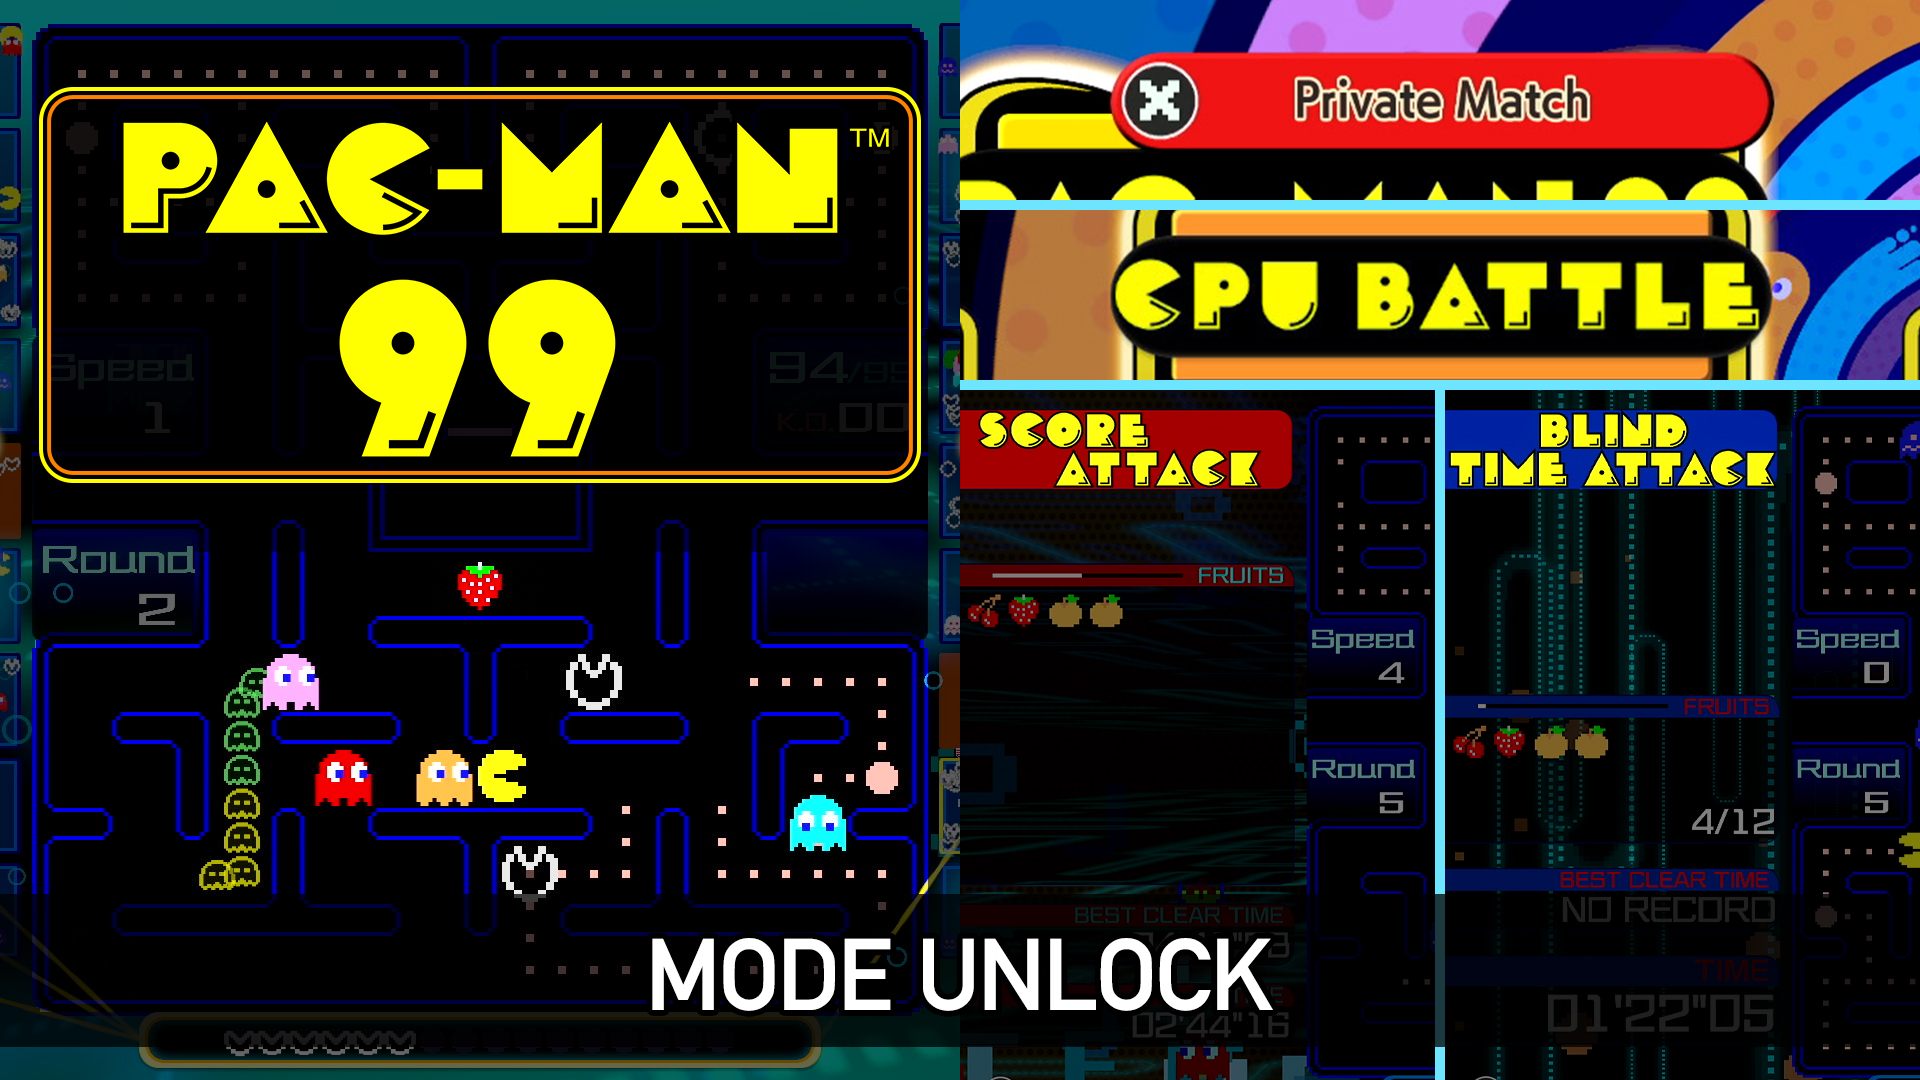 PAC-MAN 99 Mode Unlock